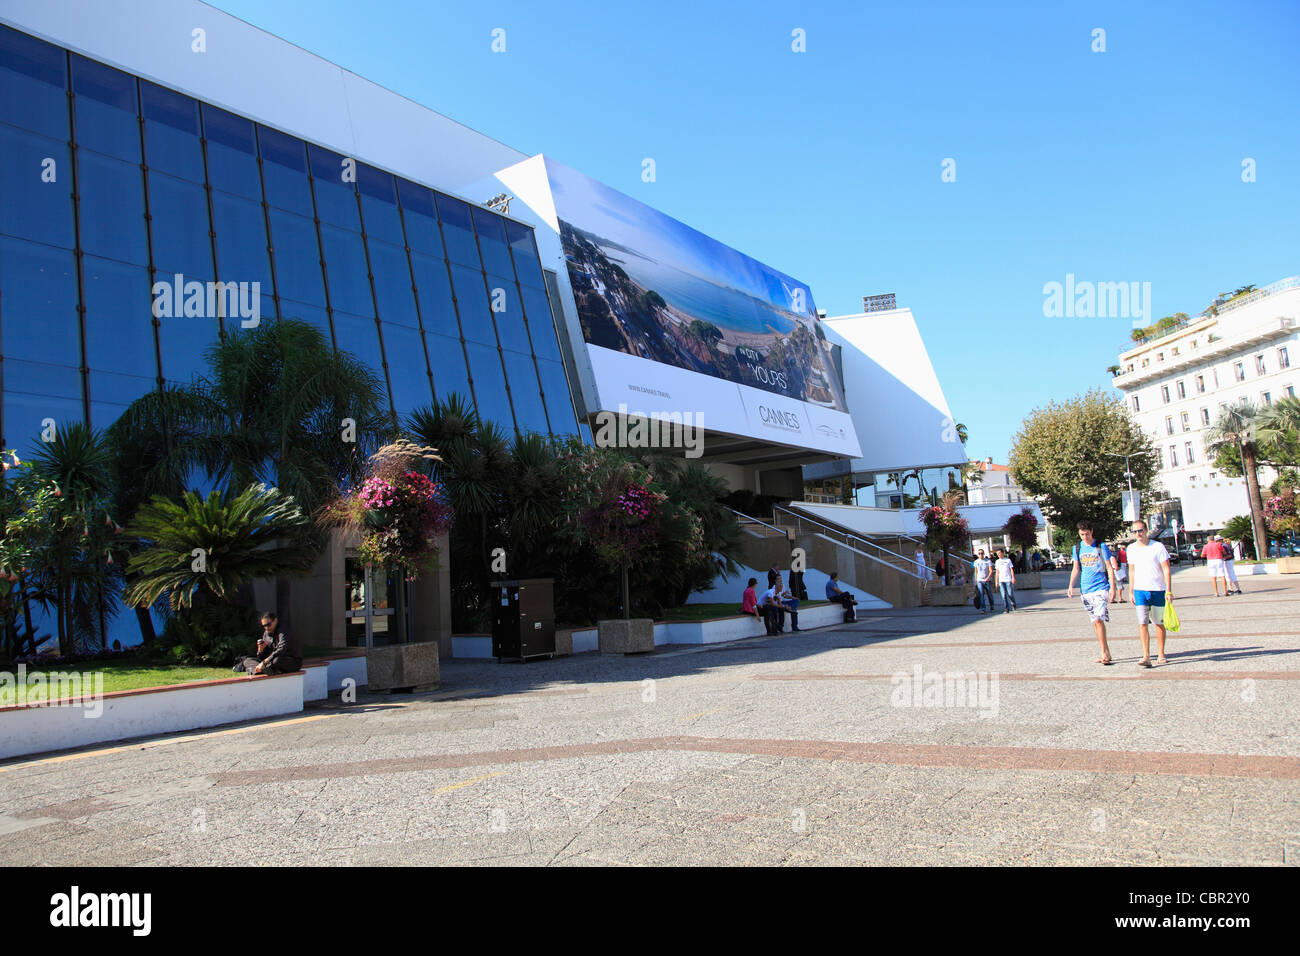 El Palais des Festivals, donde se celebra el Festival de Cine de Cannes, Cannes, Cote d'Azur, La Riviera Francesa, la Provenza, Francia, Europa Foto de stock